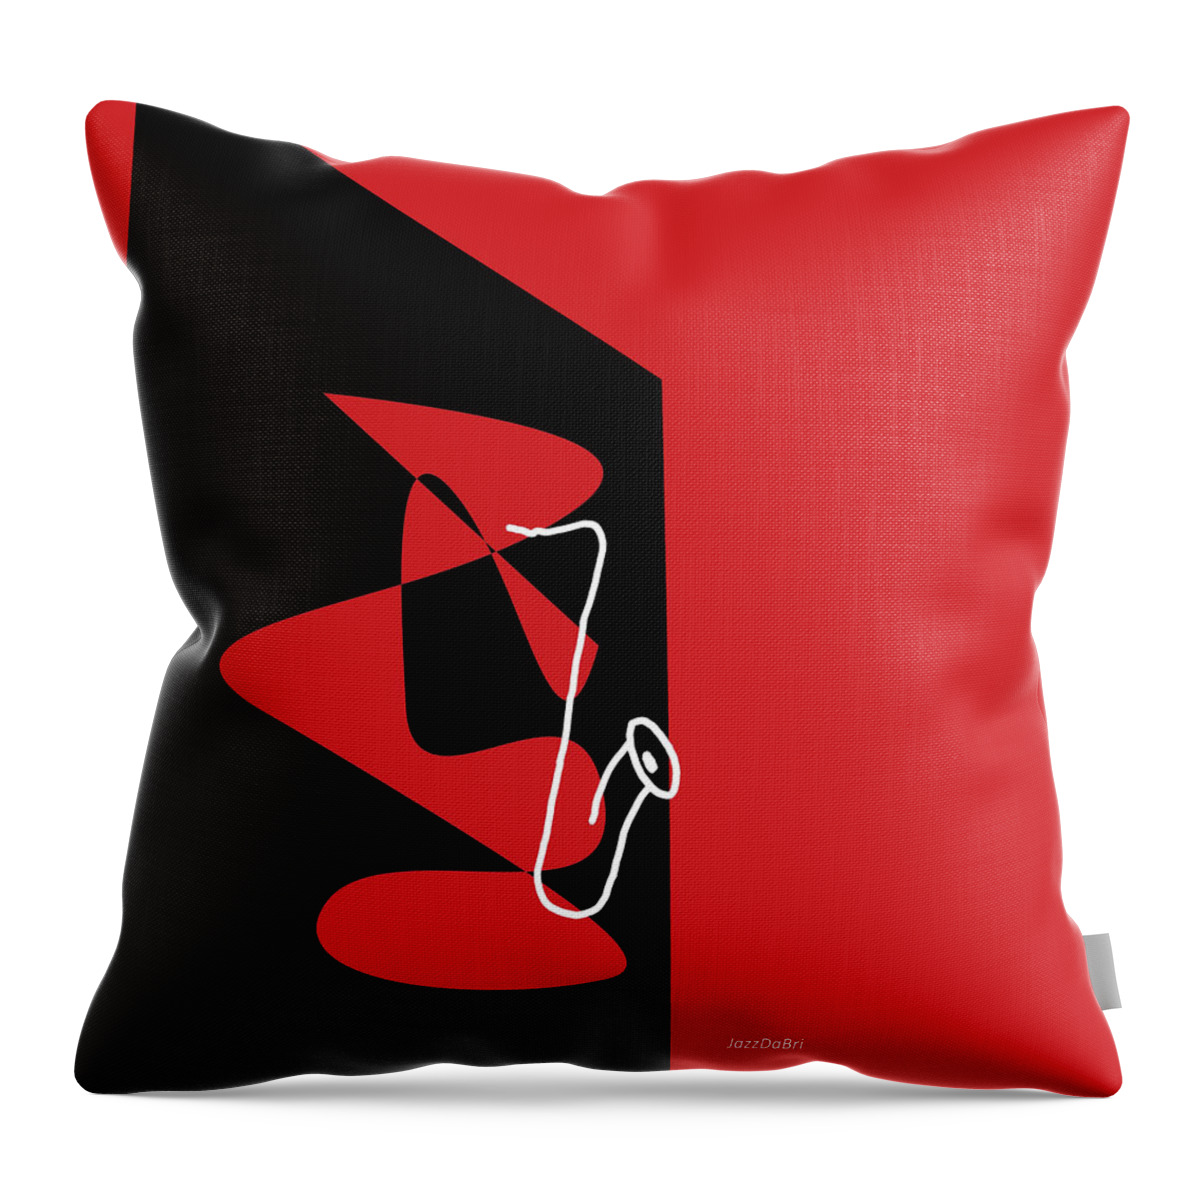 Jazzdabri Throw Pillow featuring the digital art Saxophone in Red by David Bridburg